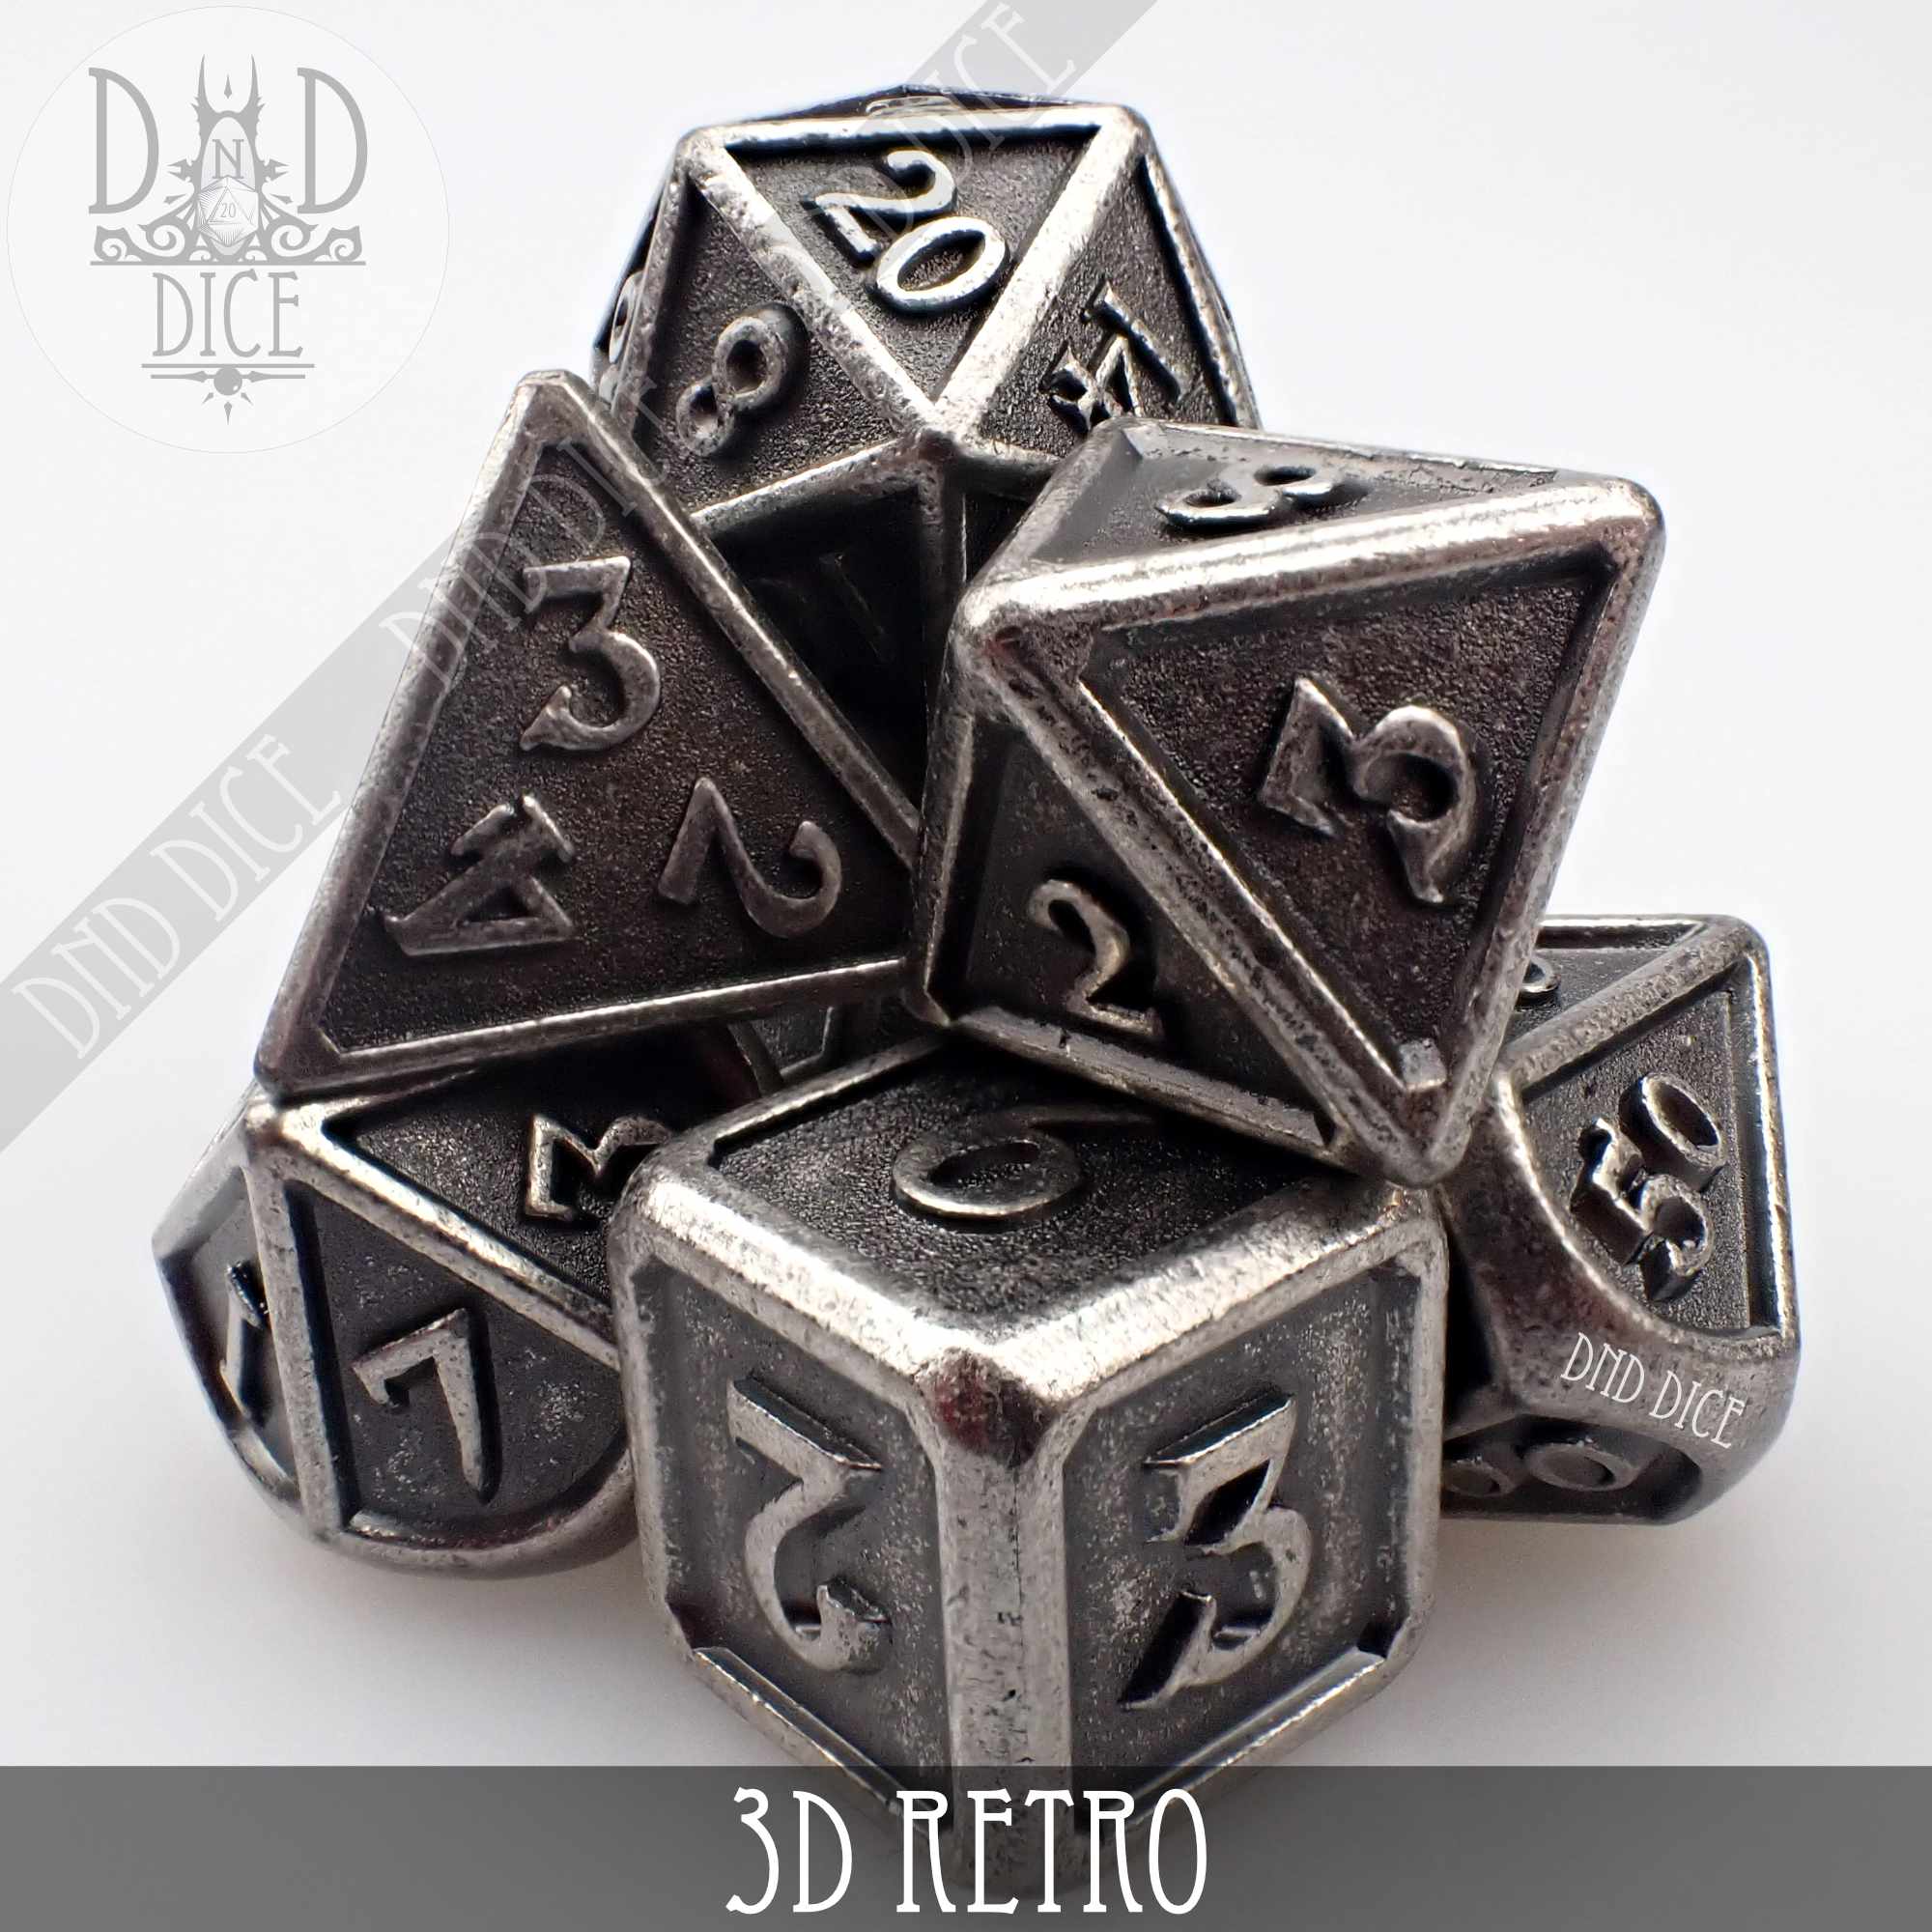 3D Retro (Metal)